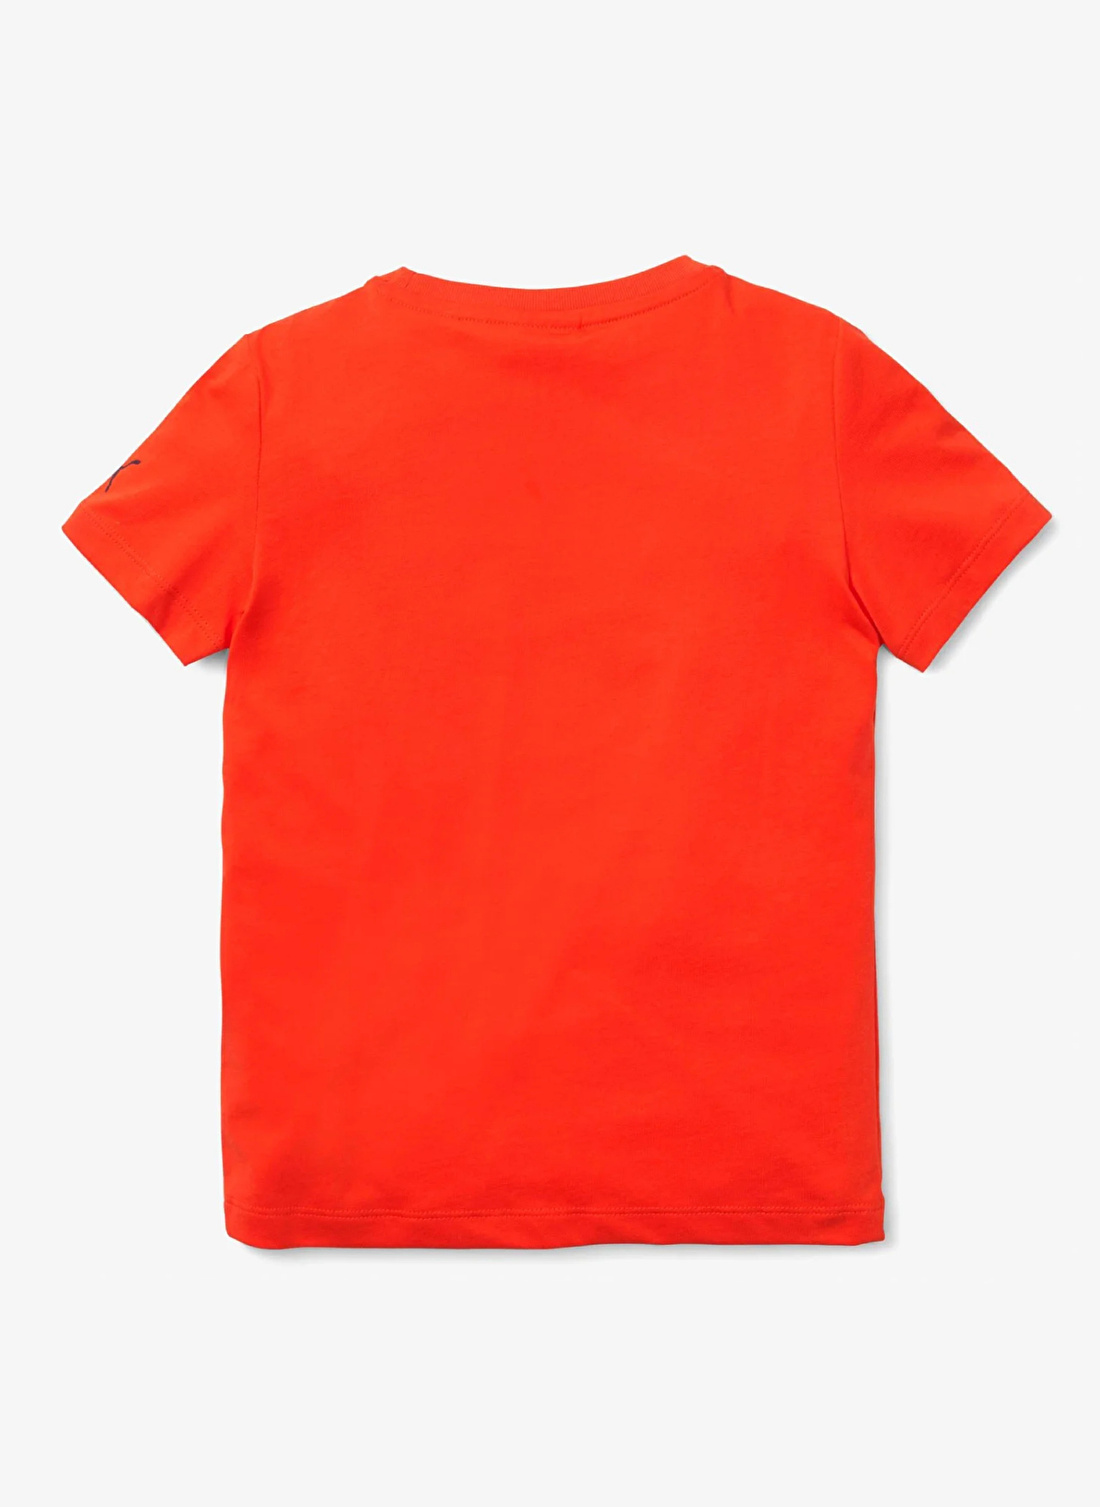 Puma Kırmızı Erkek Çocuk T-Shirt 